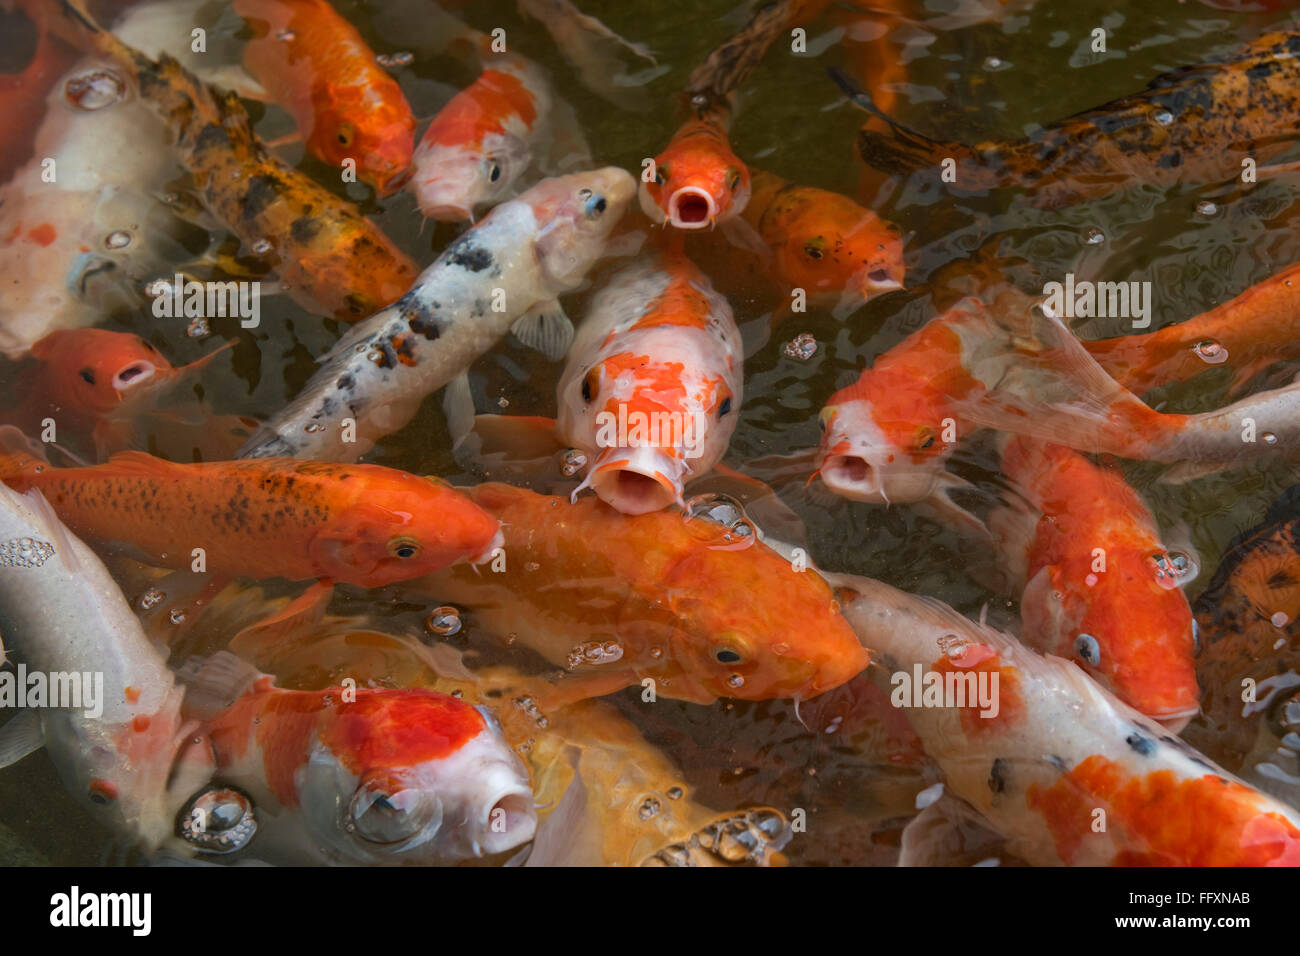 La carpa Koi en un estanque ornamental, Bangkok, Tailandia Foto de stock